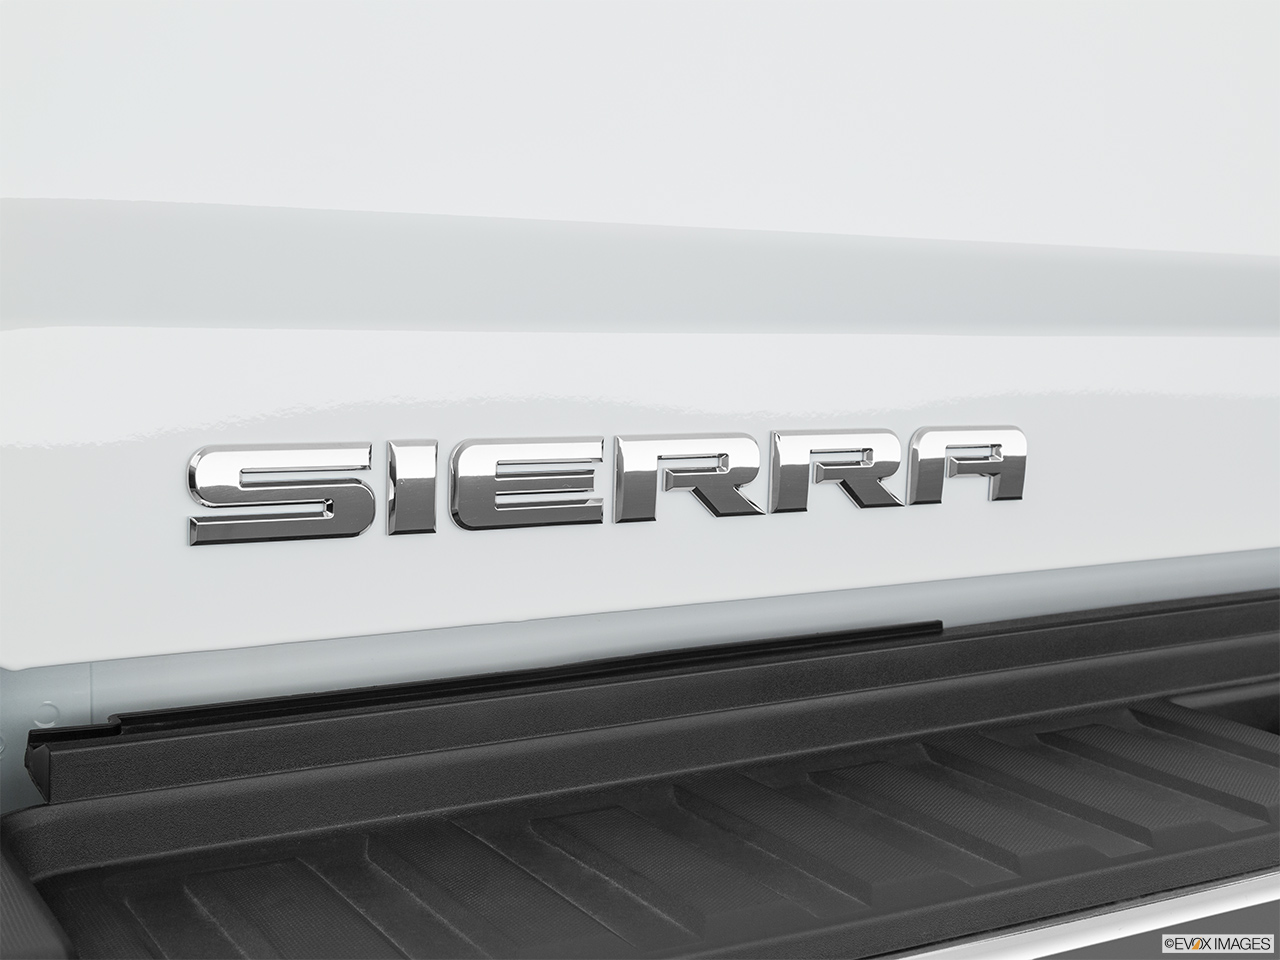 2019 GMC Sierra 2500HD Base Rear model badge/emblem 